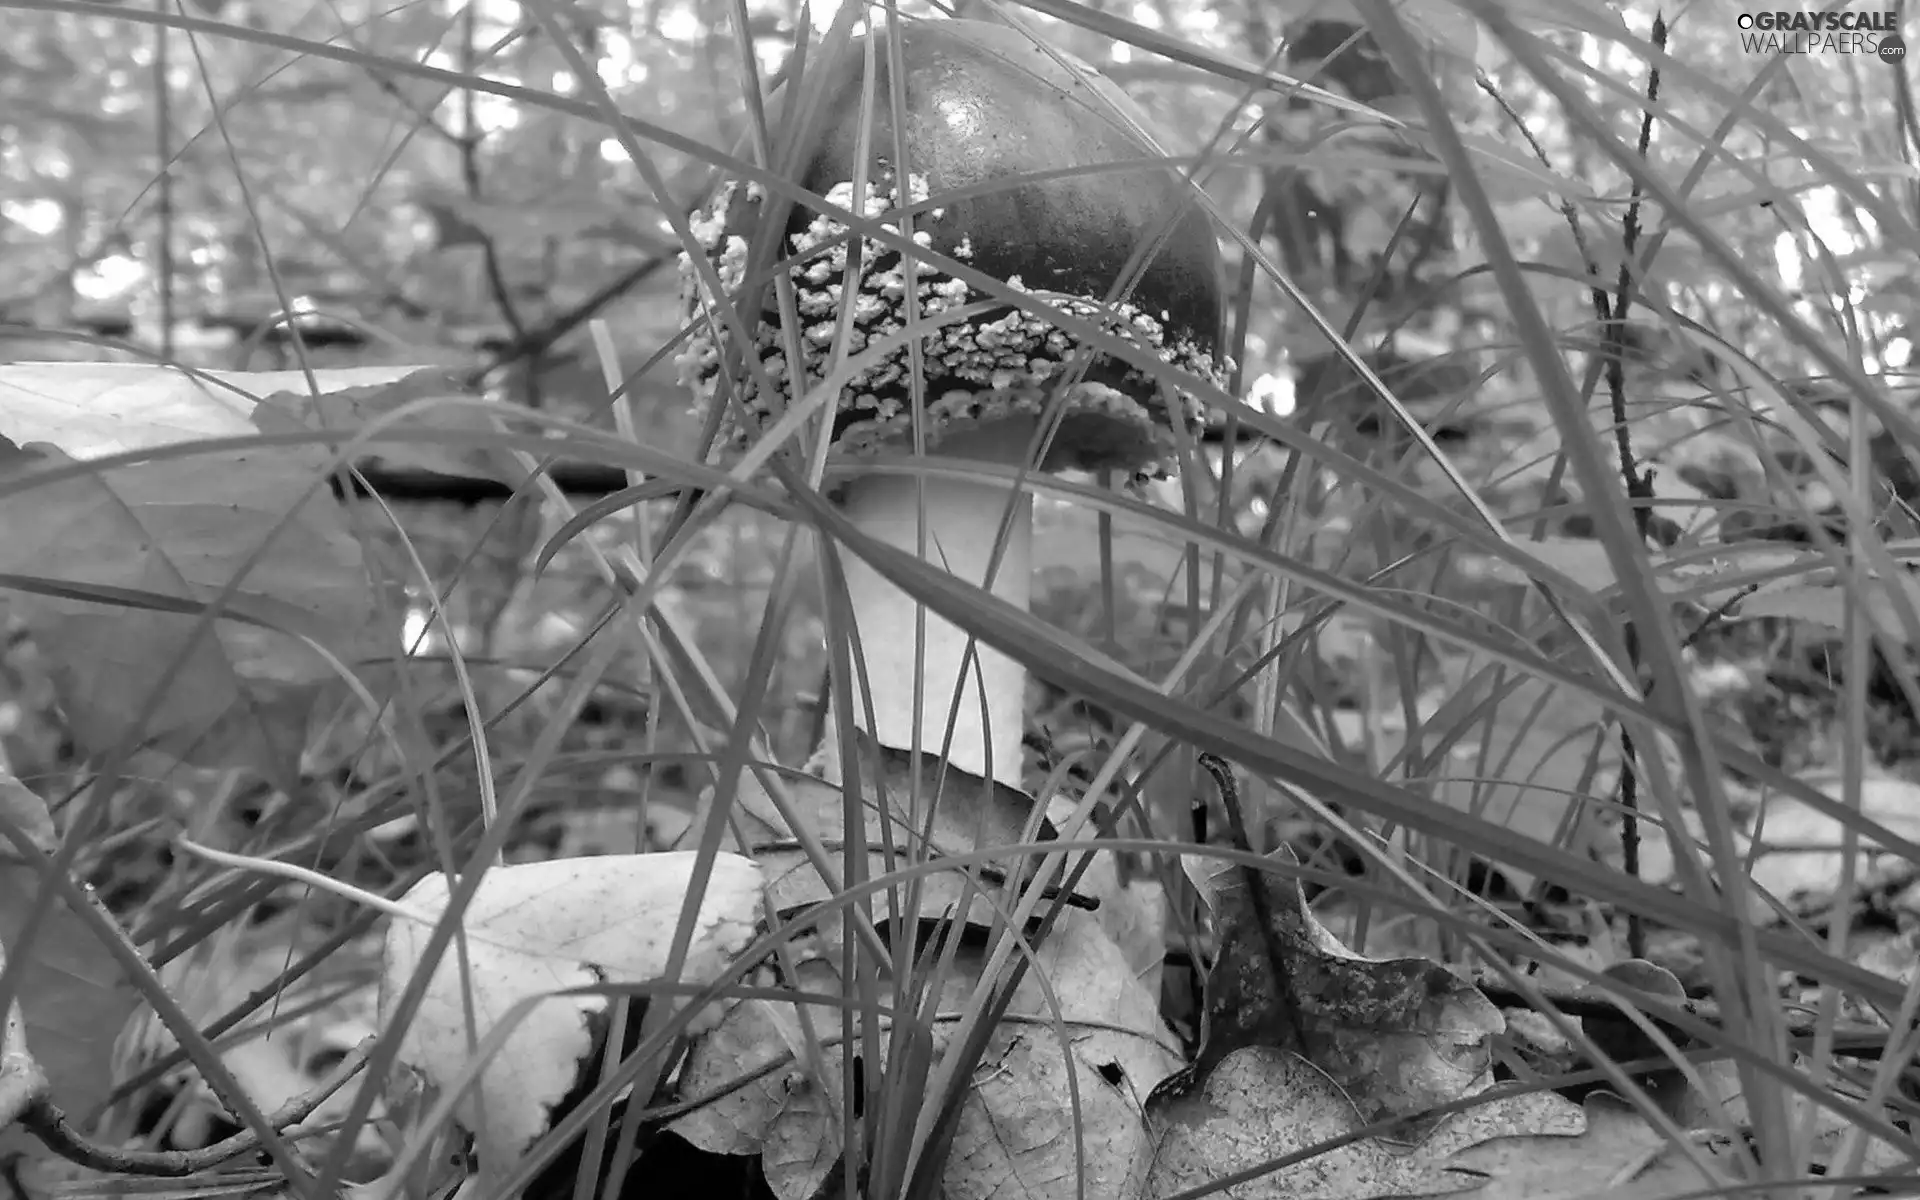 Mushrooms, grass, Leaf, toadstool